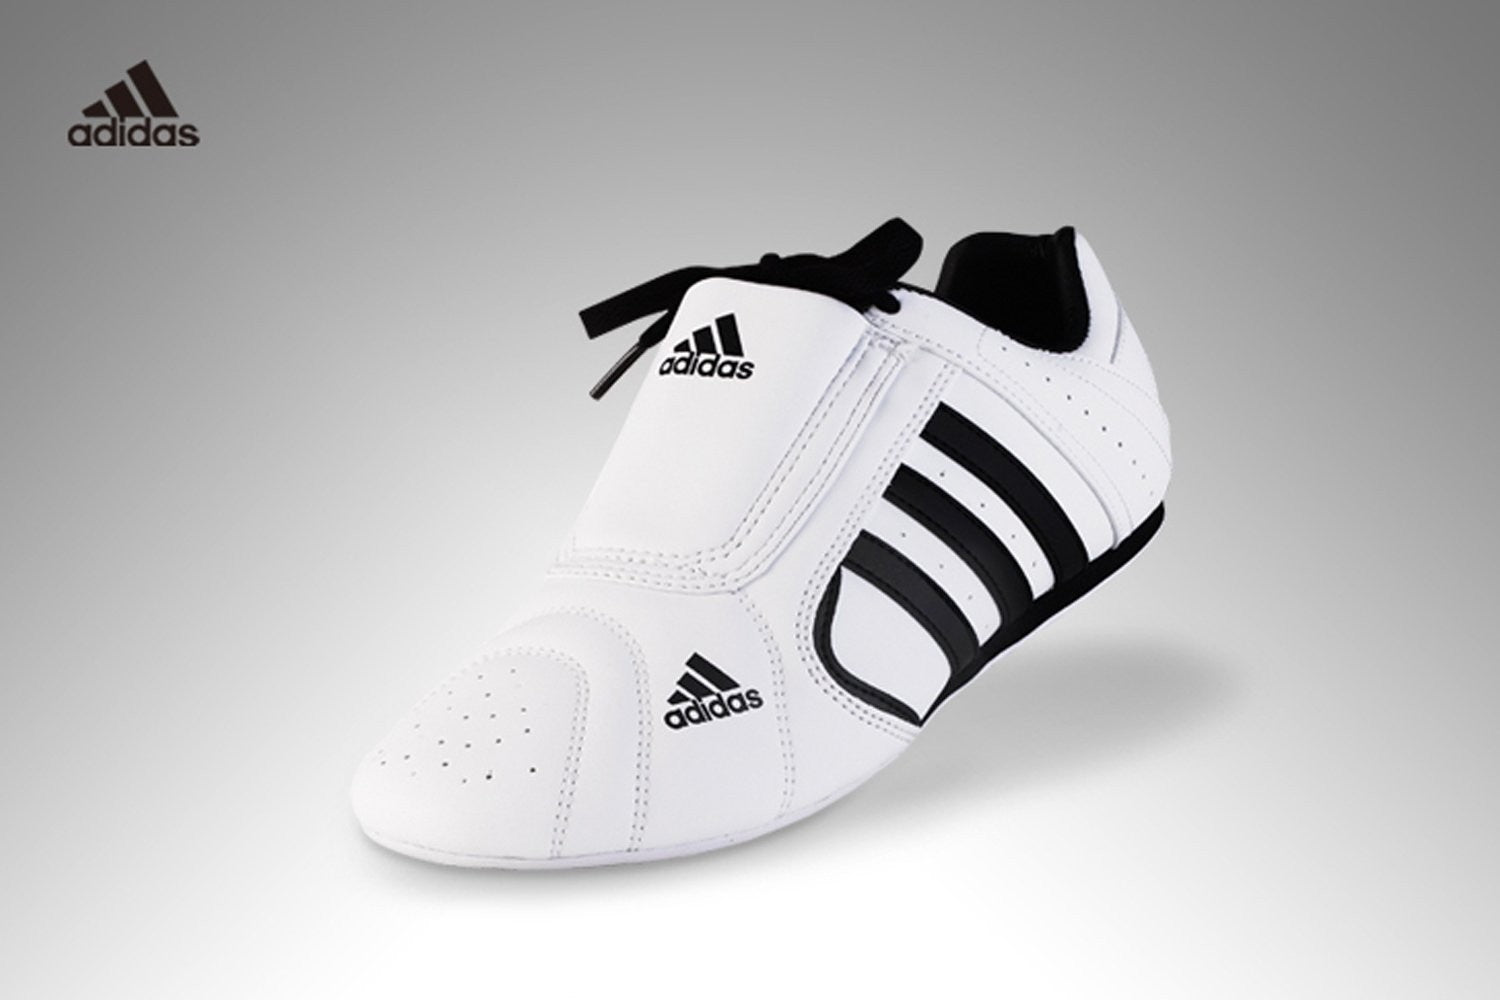 adidas adi sm iii training shoes